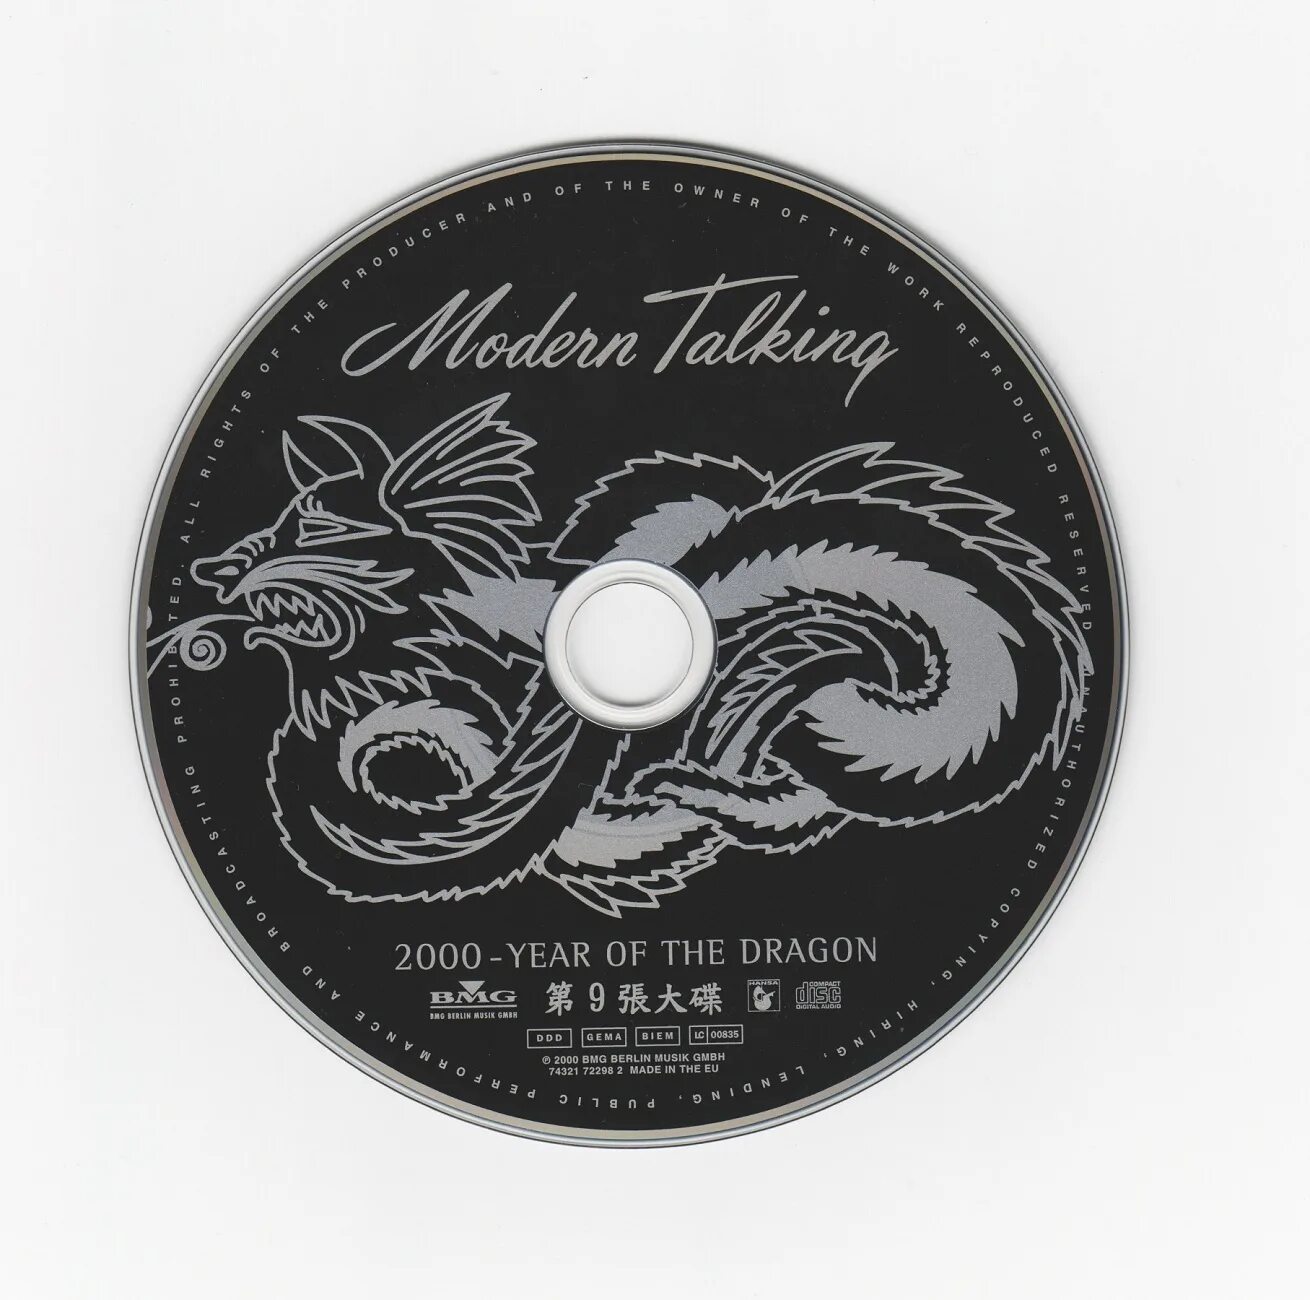 Modern talking year of the Dragon 2000. Modern talking 6 album. Modern talking year of the Dragon обложка. Modern talking 2000 year of the Dragon аудиокассета.